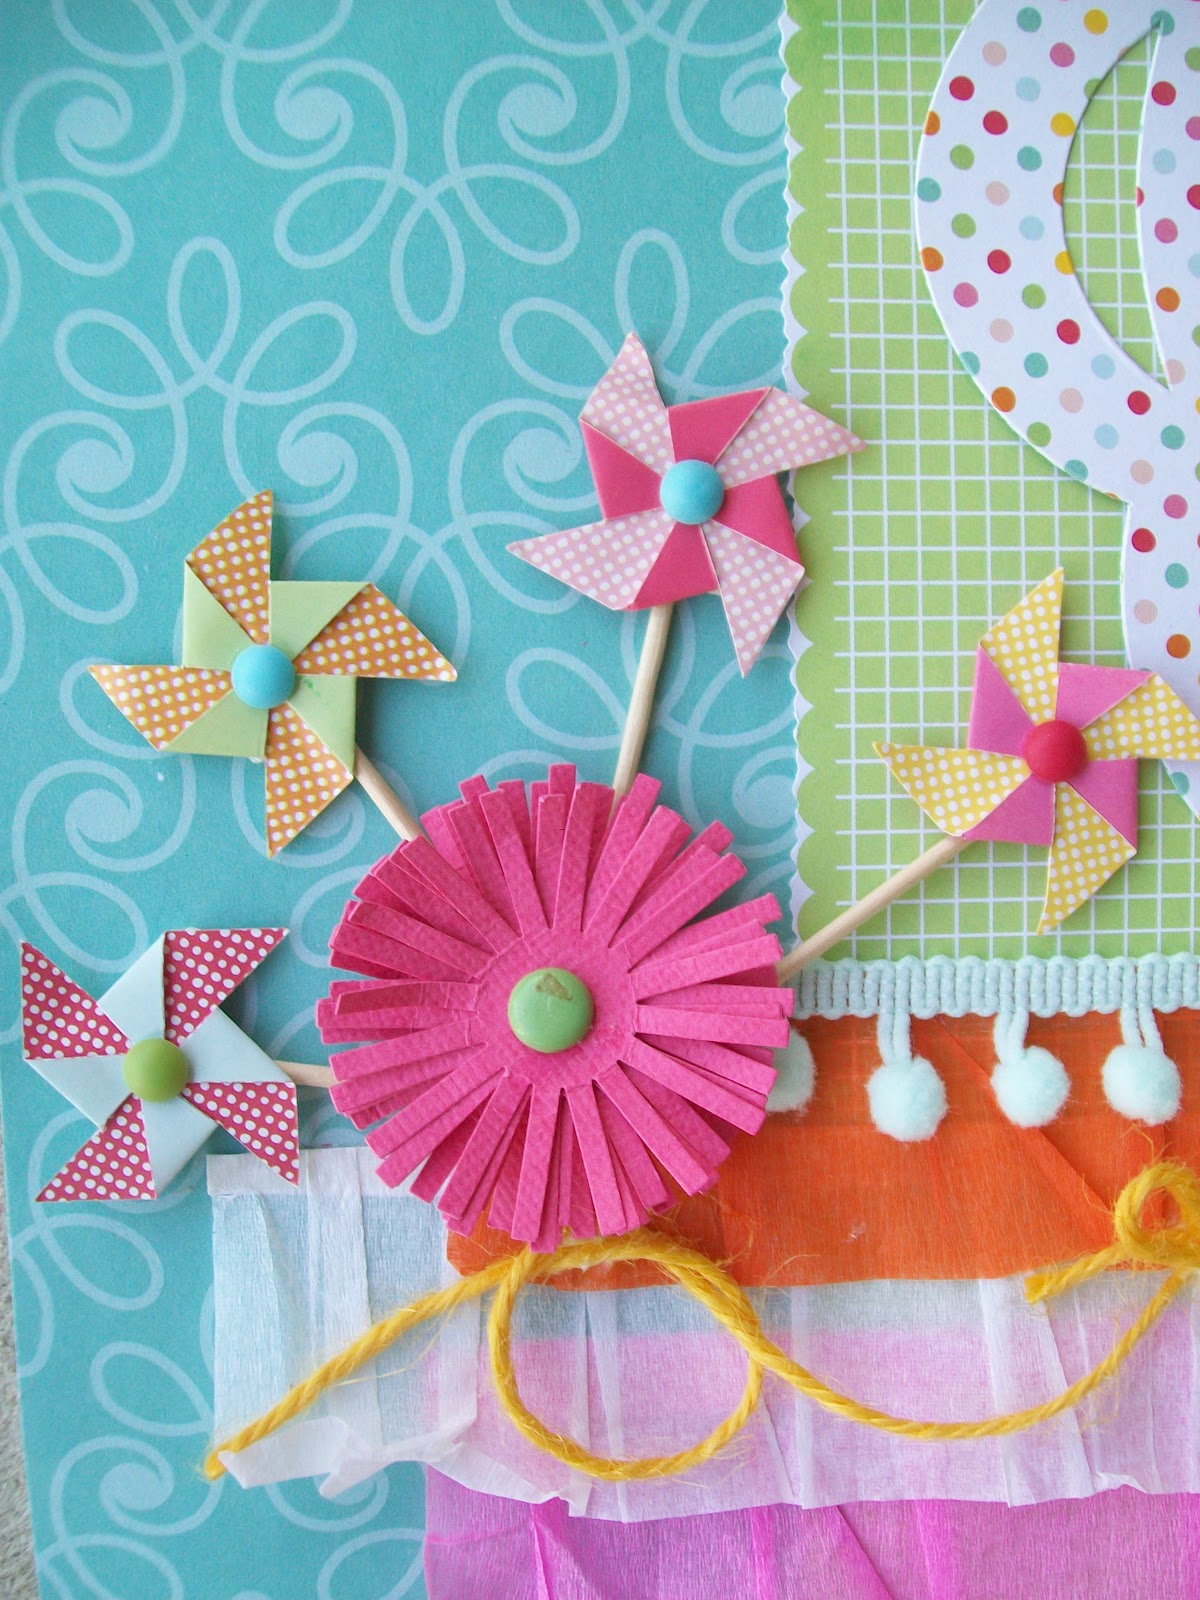 AMAZING GRACE Paper Crafts: Happy birthday layout